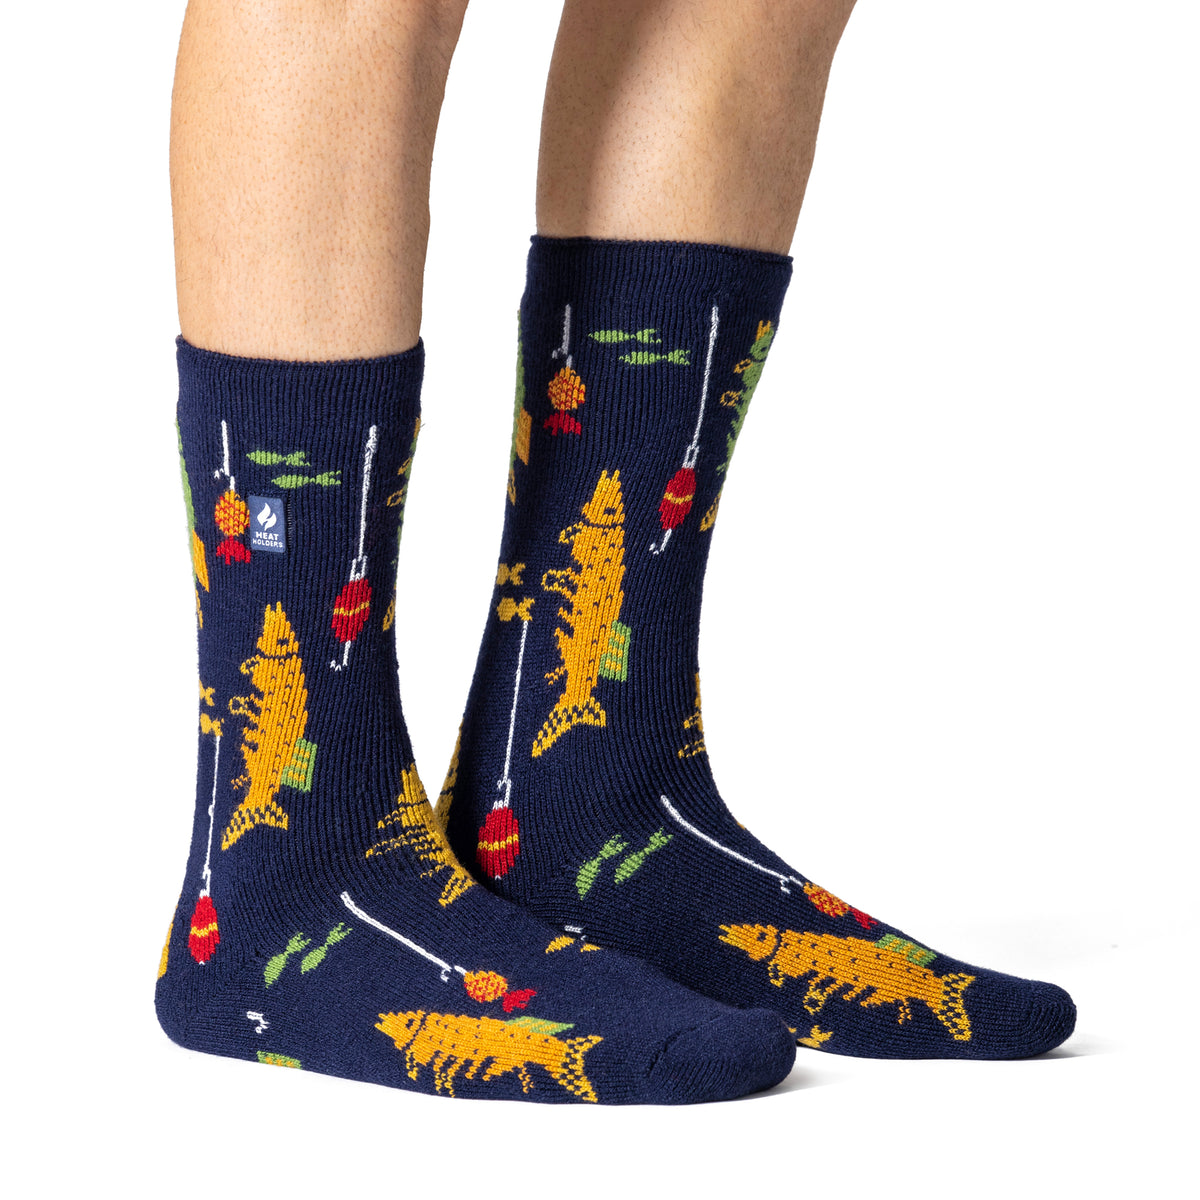 Mens Original Finch Thermal Socks - Navy – Heat Holders